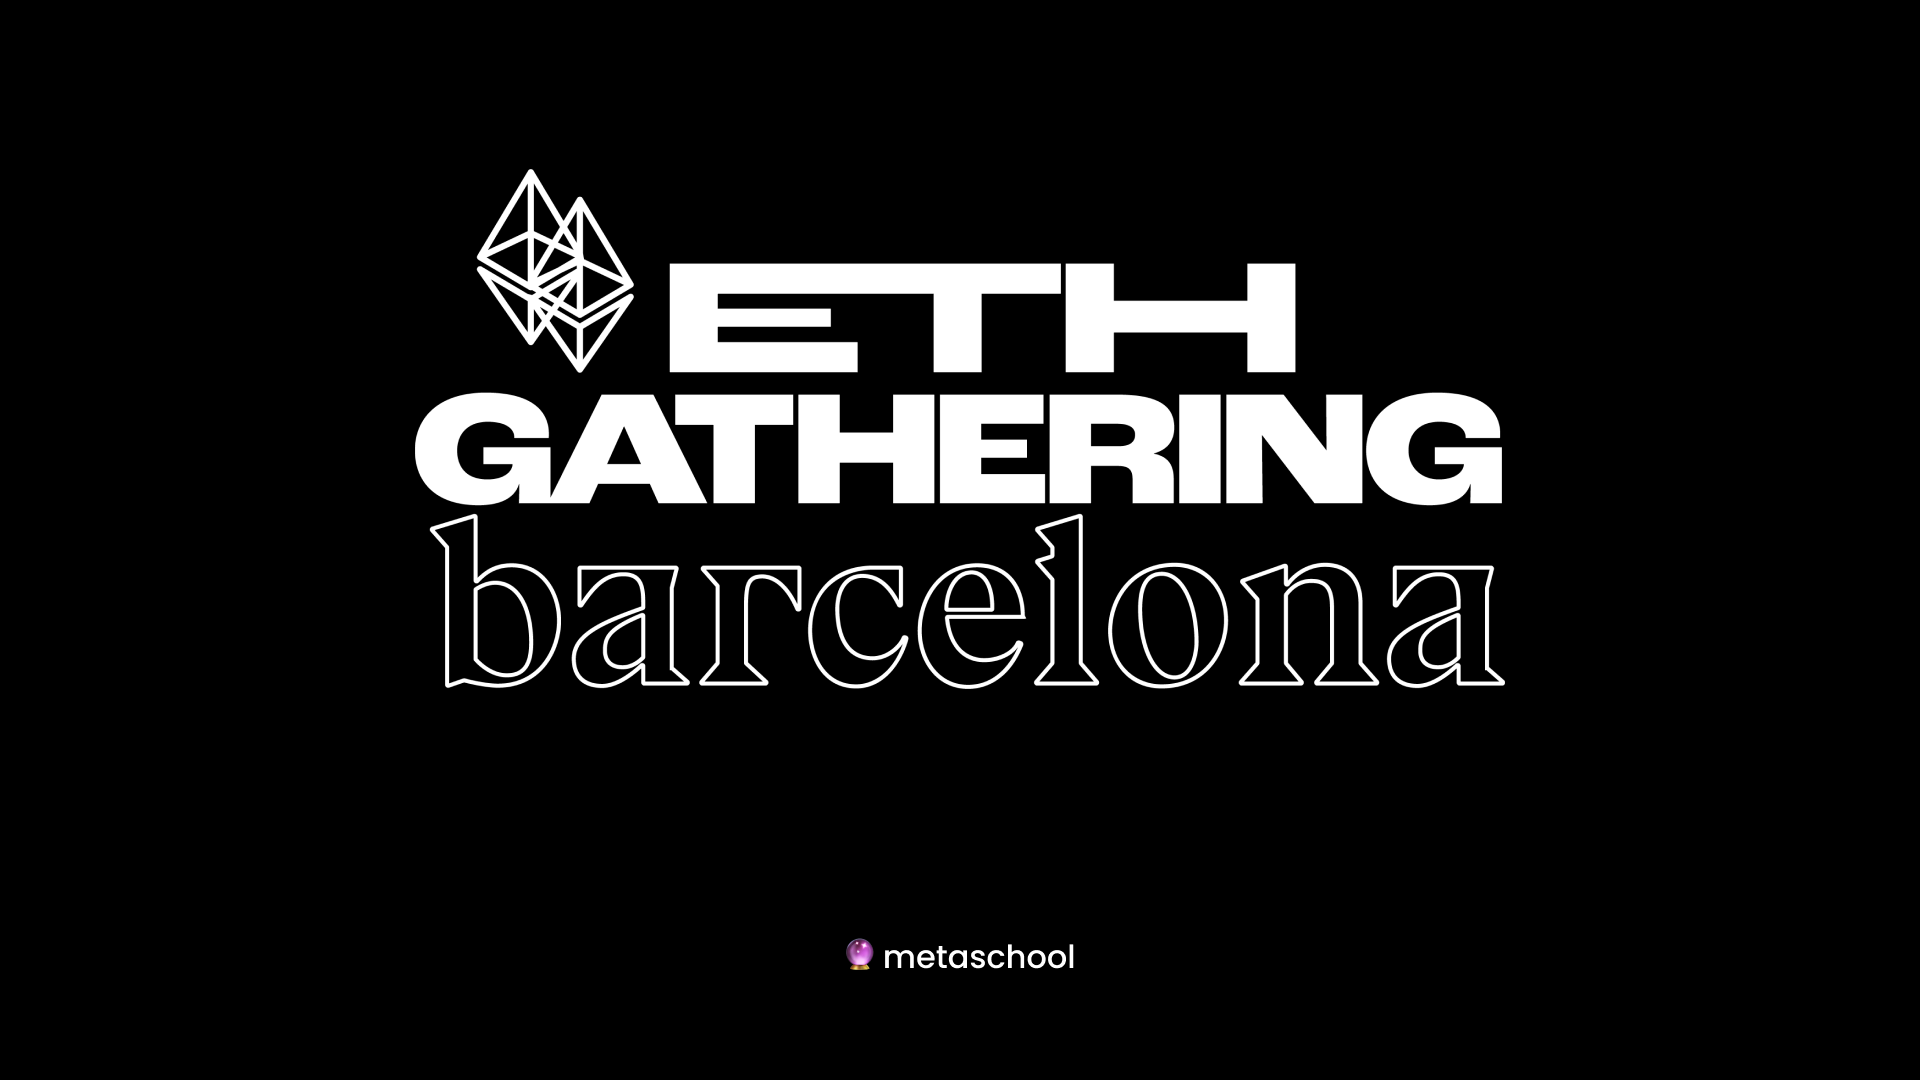 eth gathering barcelona press release cover